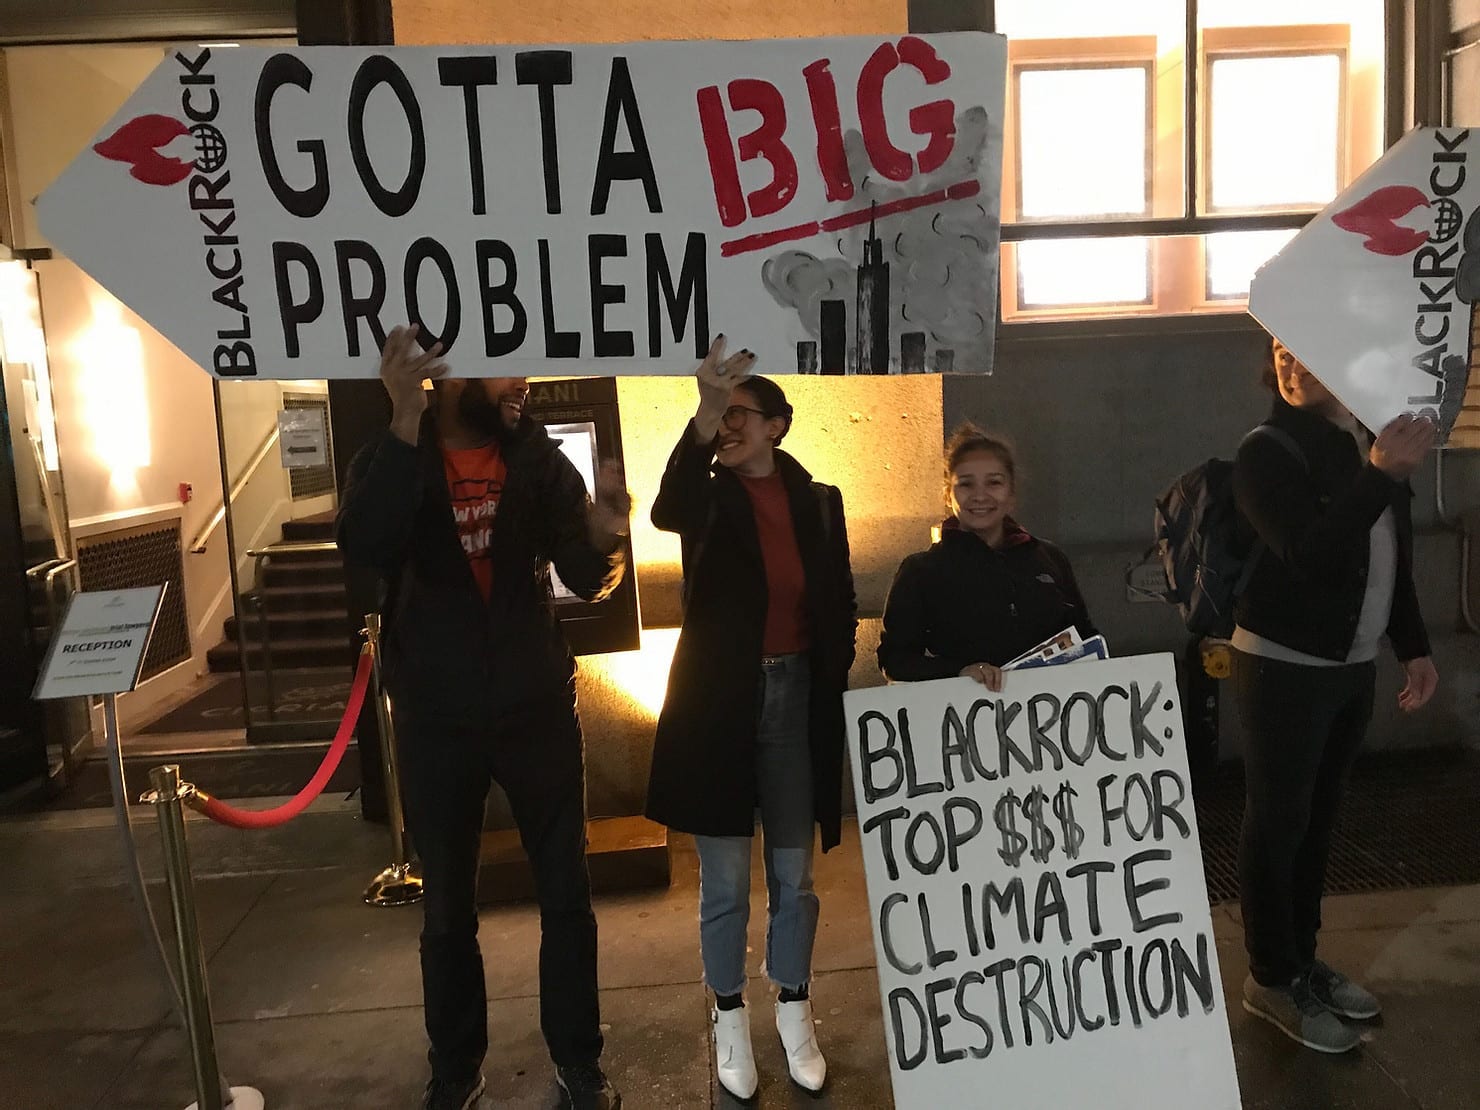 Activists outside an event, following BlackRock CEO Larry Fink